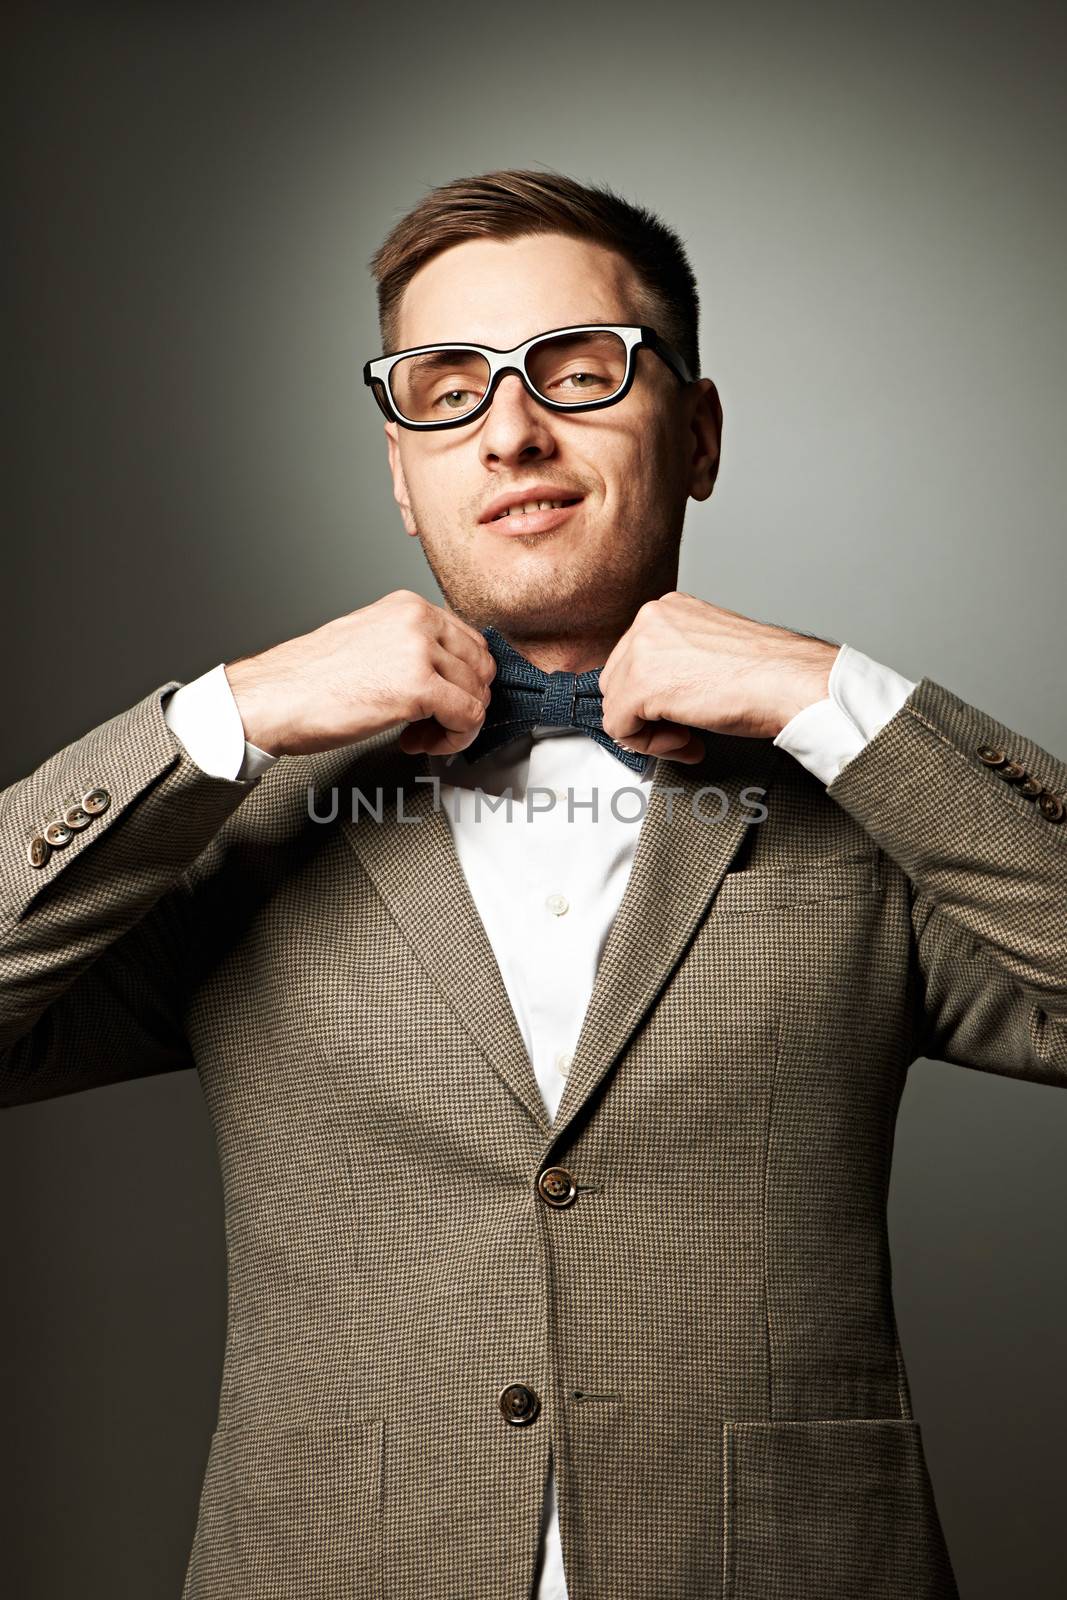 Confident nerd in eyeglasses adjusting his bow-tie by haveseen